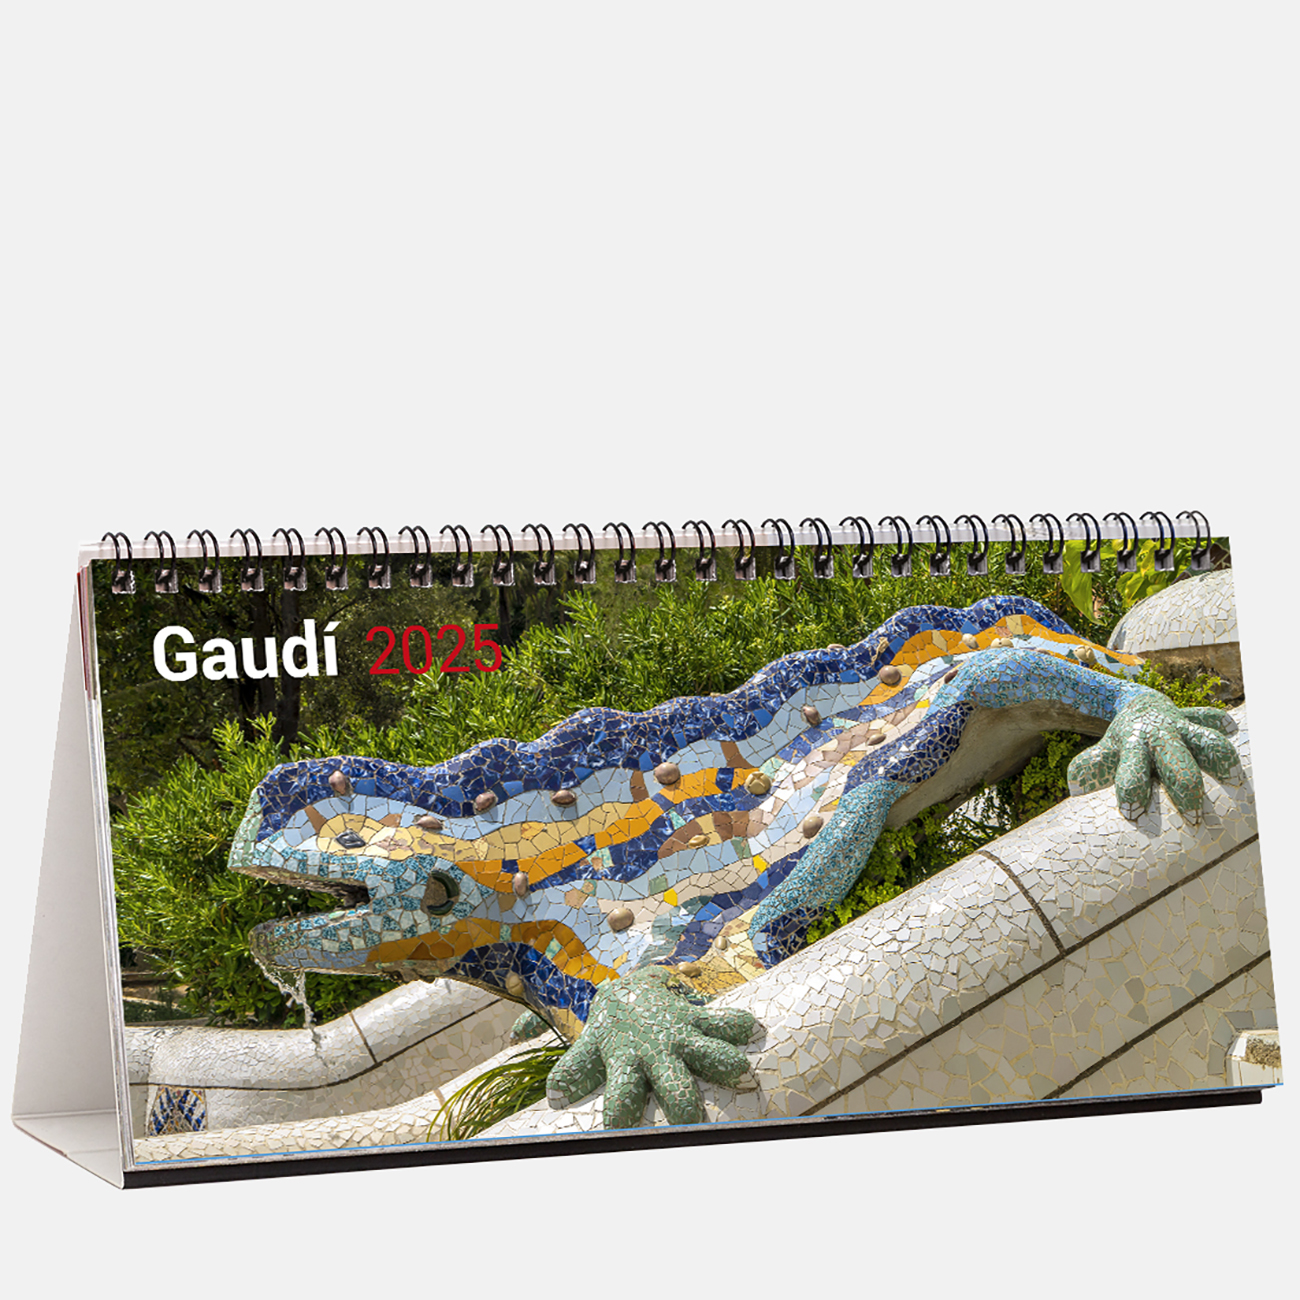 Calendari 2025 Gaudí s25g calendario sobremesa panoramico 2025 gaudi